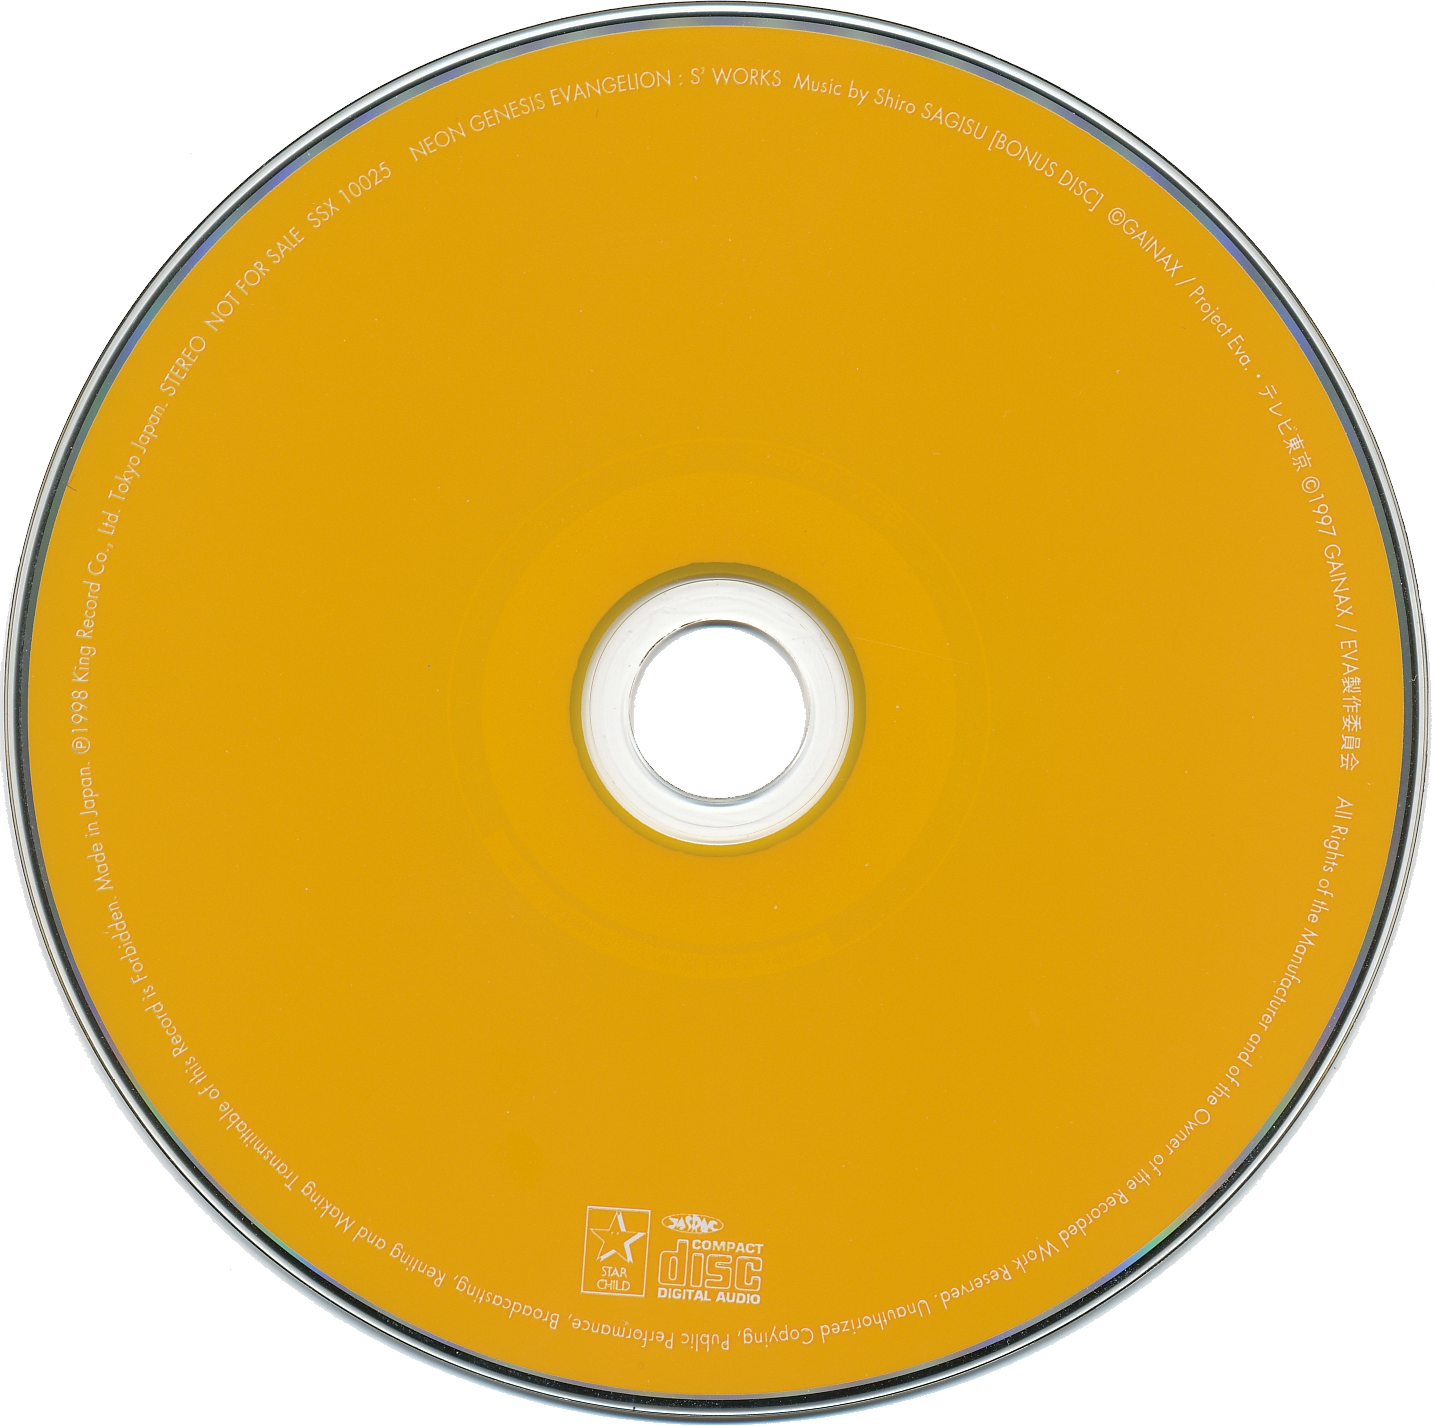 CD DVD PNG image, transparent png download